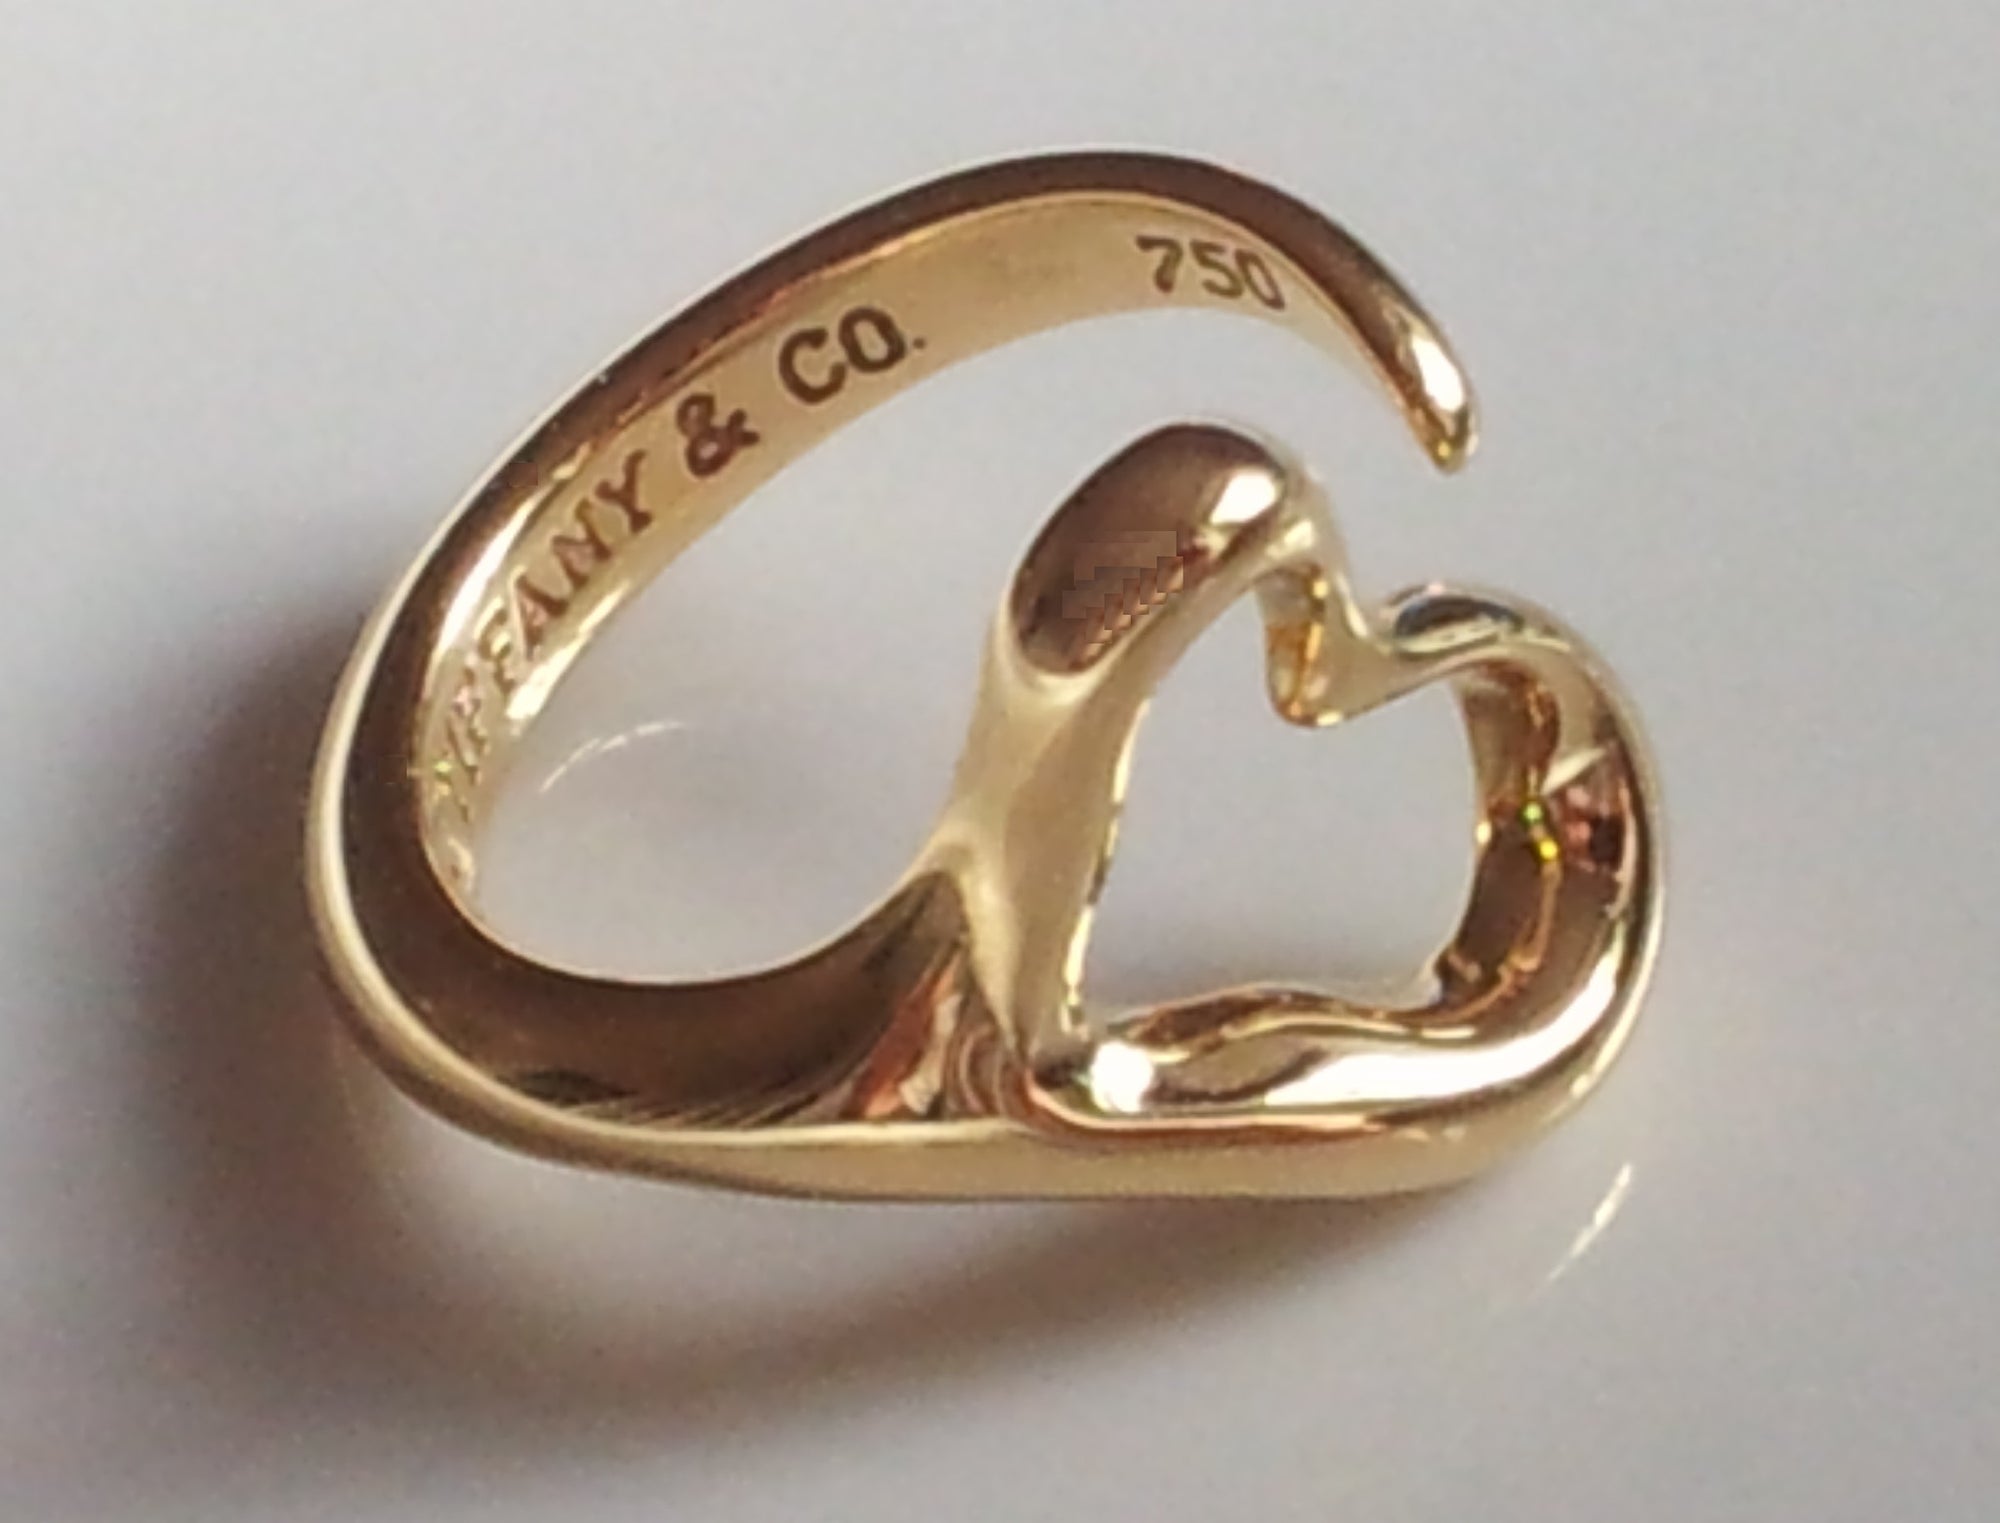 Tiffany & Co. Open Heart Ring by Elsa Peretti in 18K Yellow Gold. Size K-M